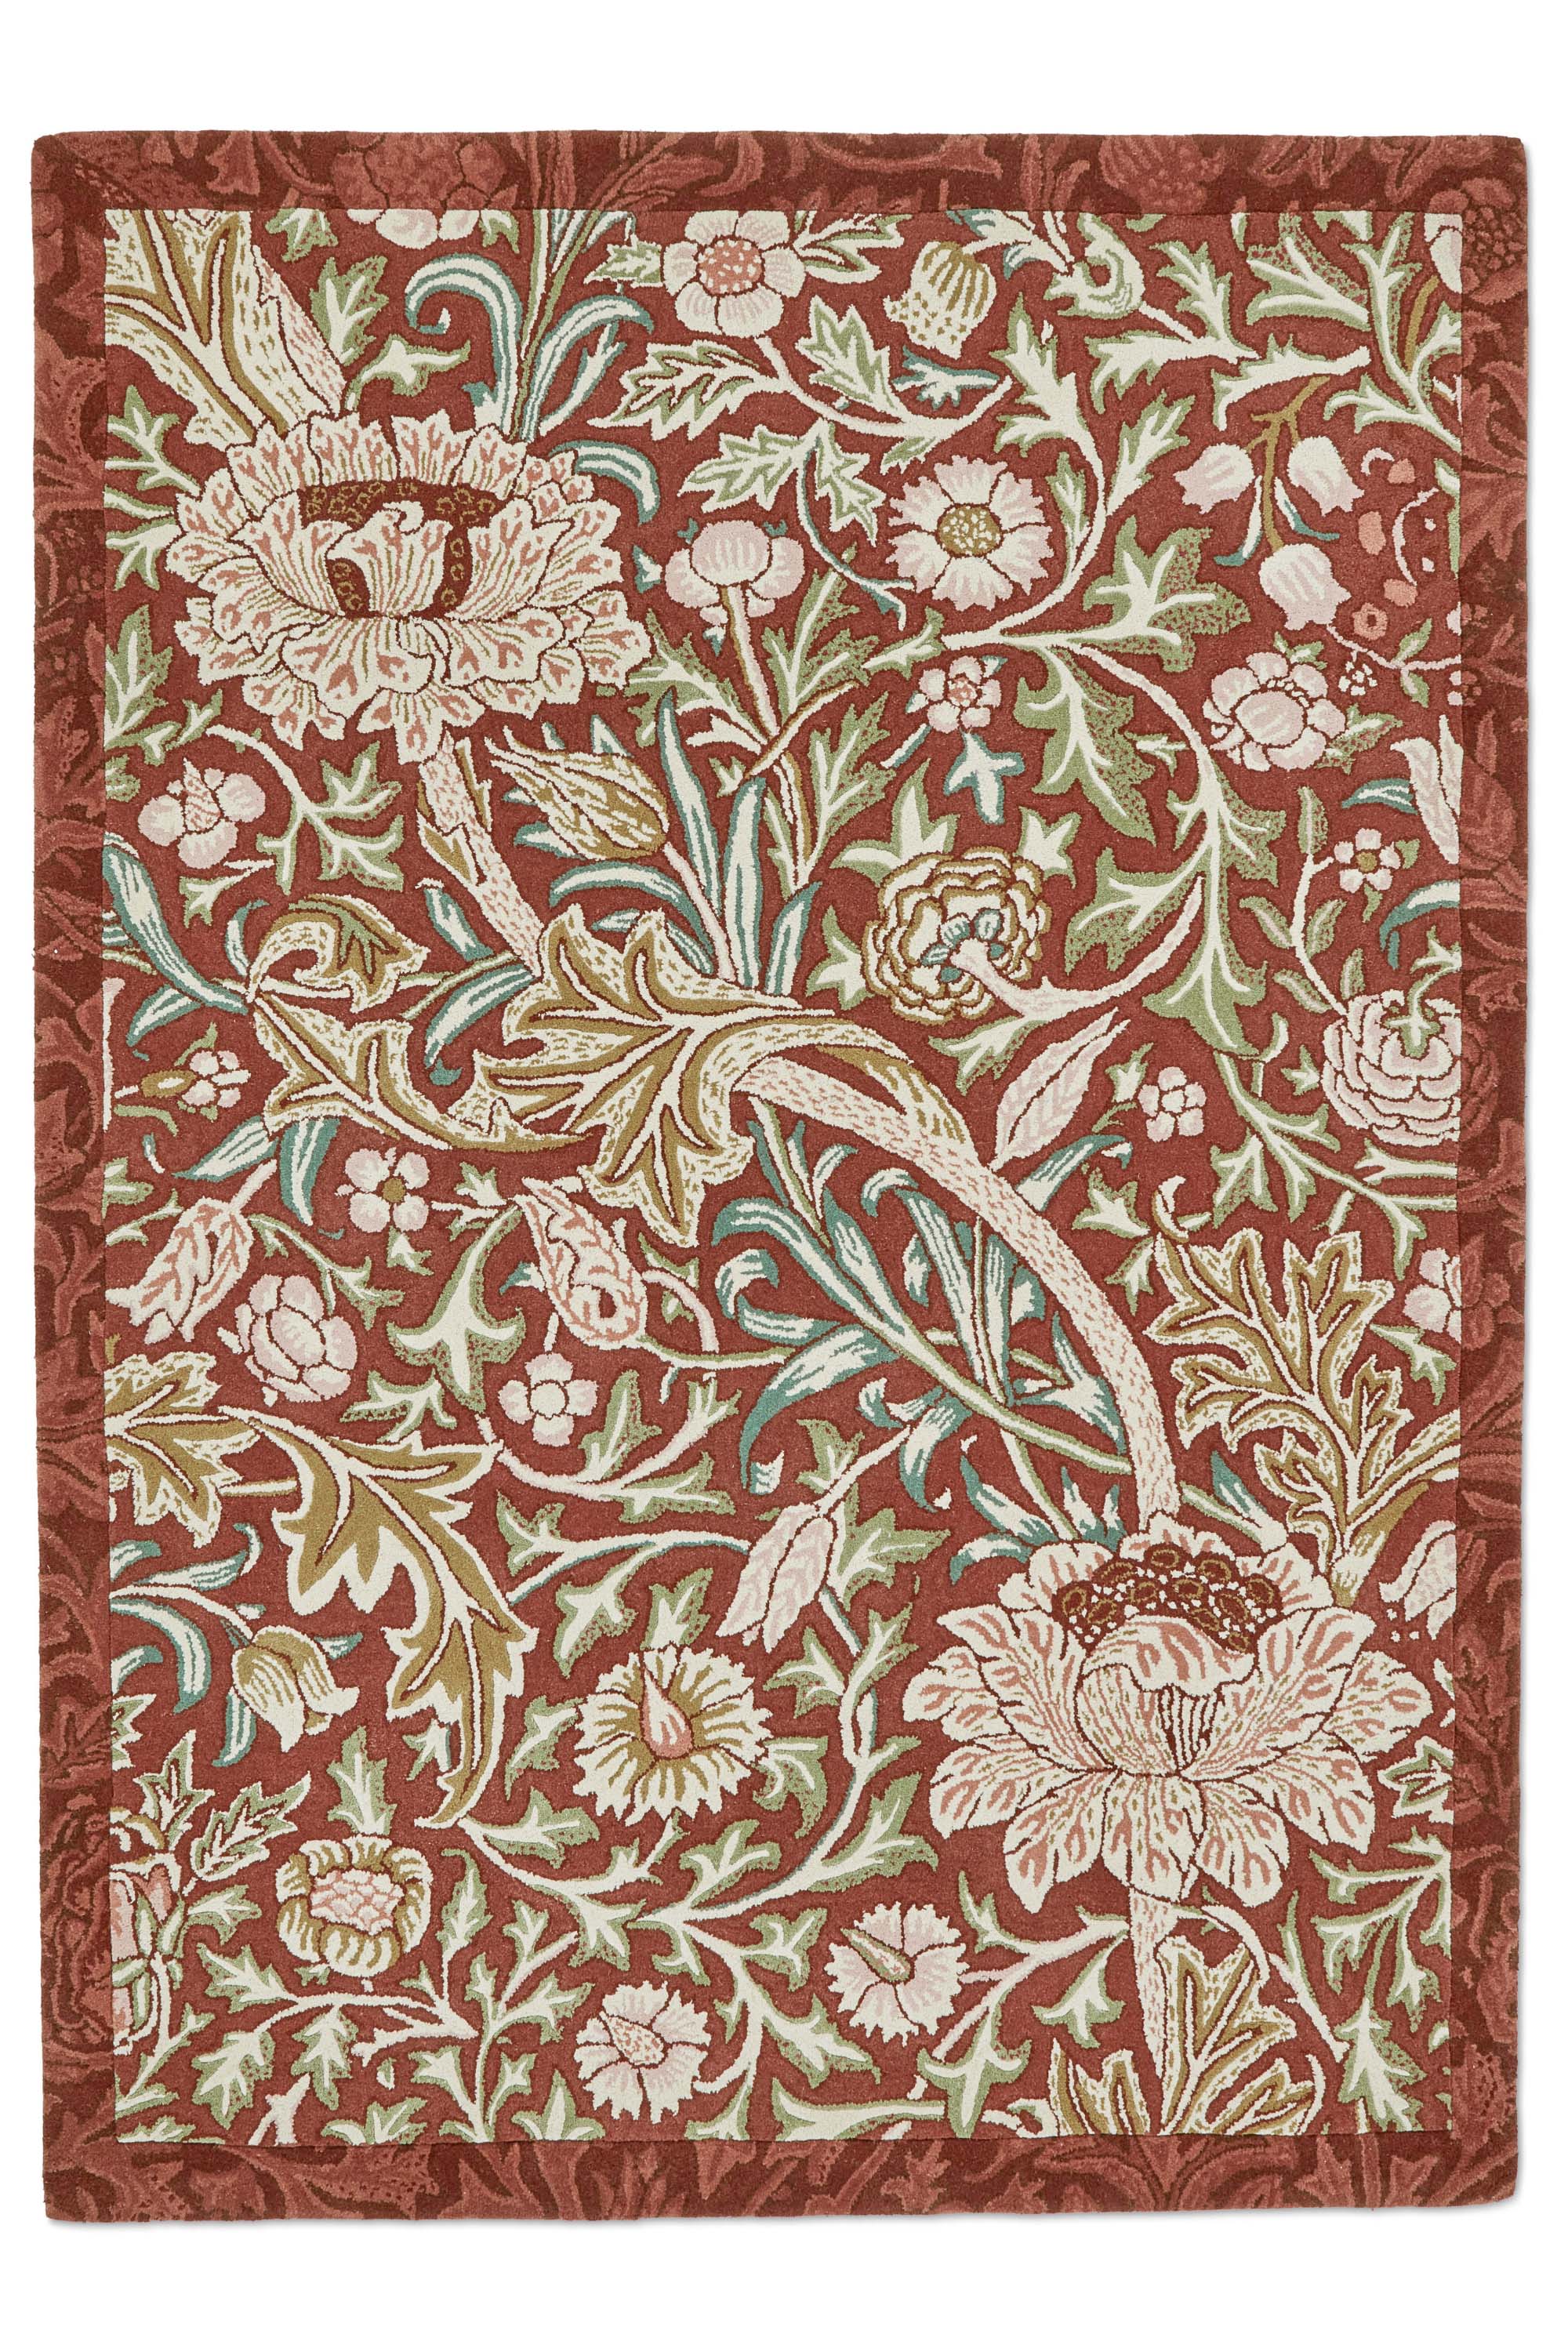 Red floral bordered rug